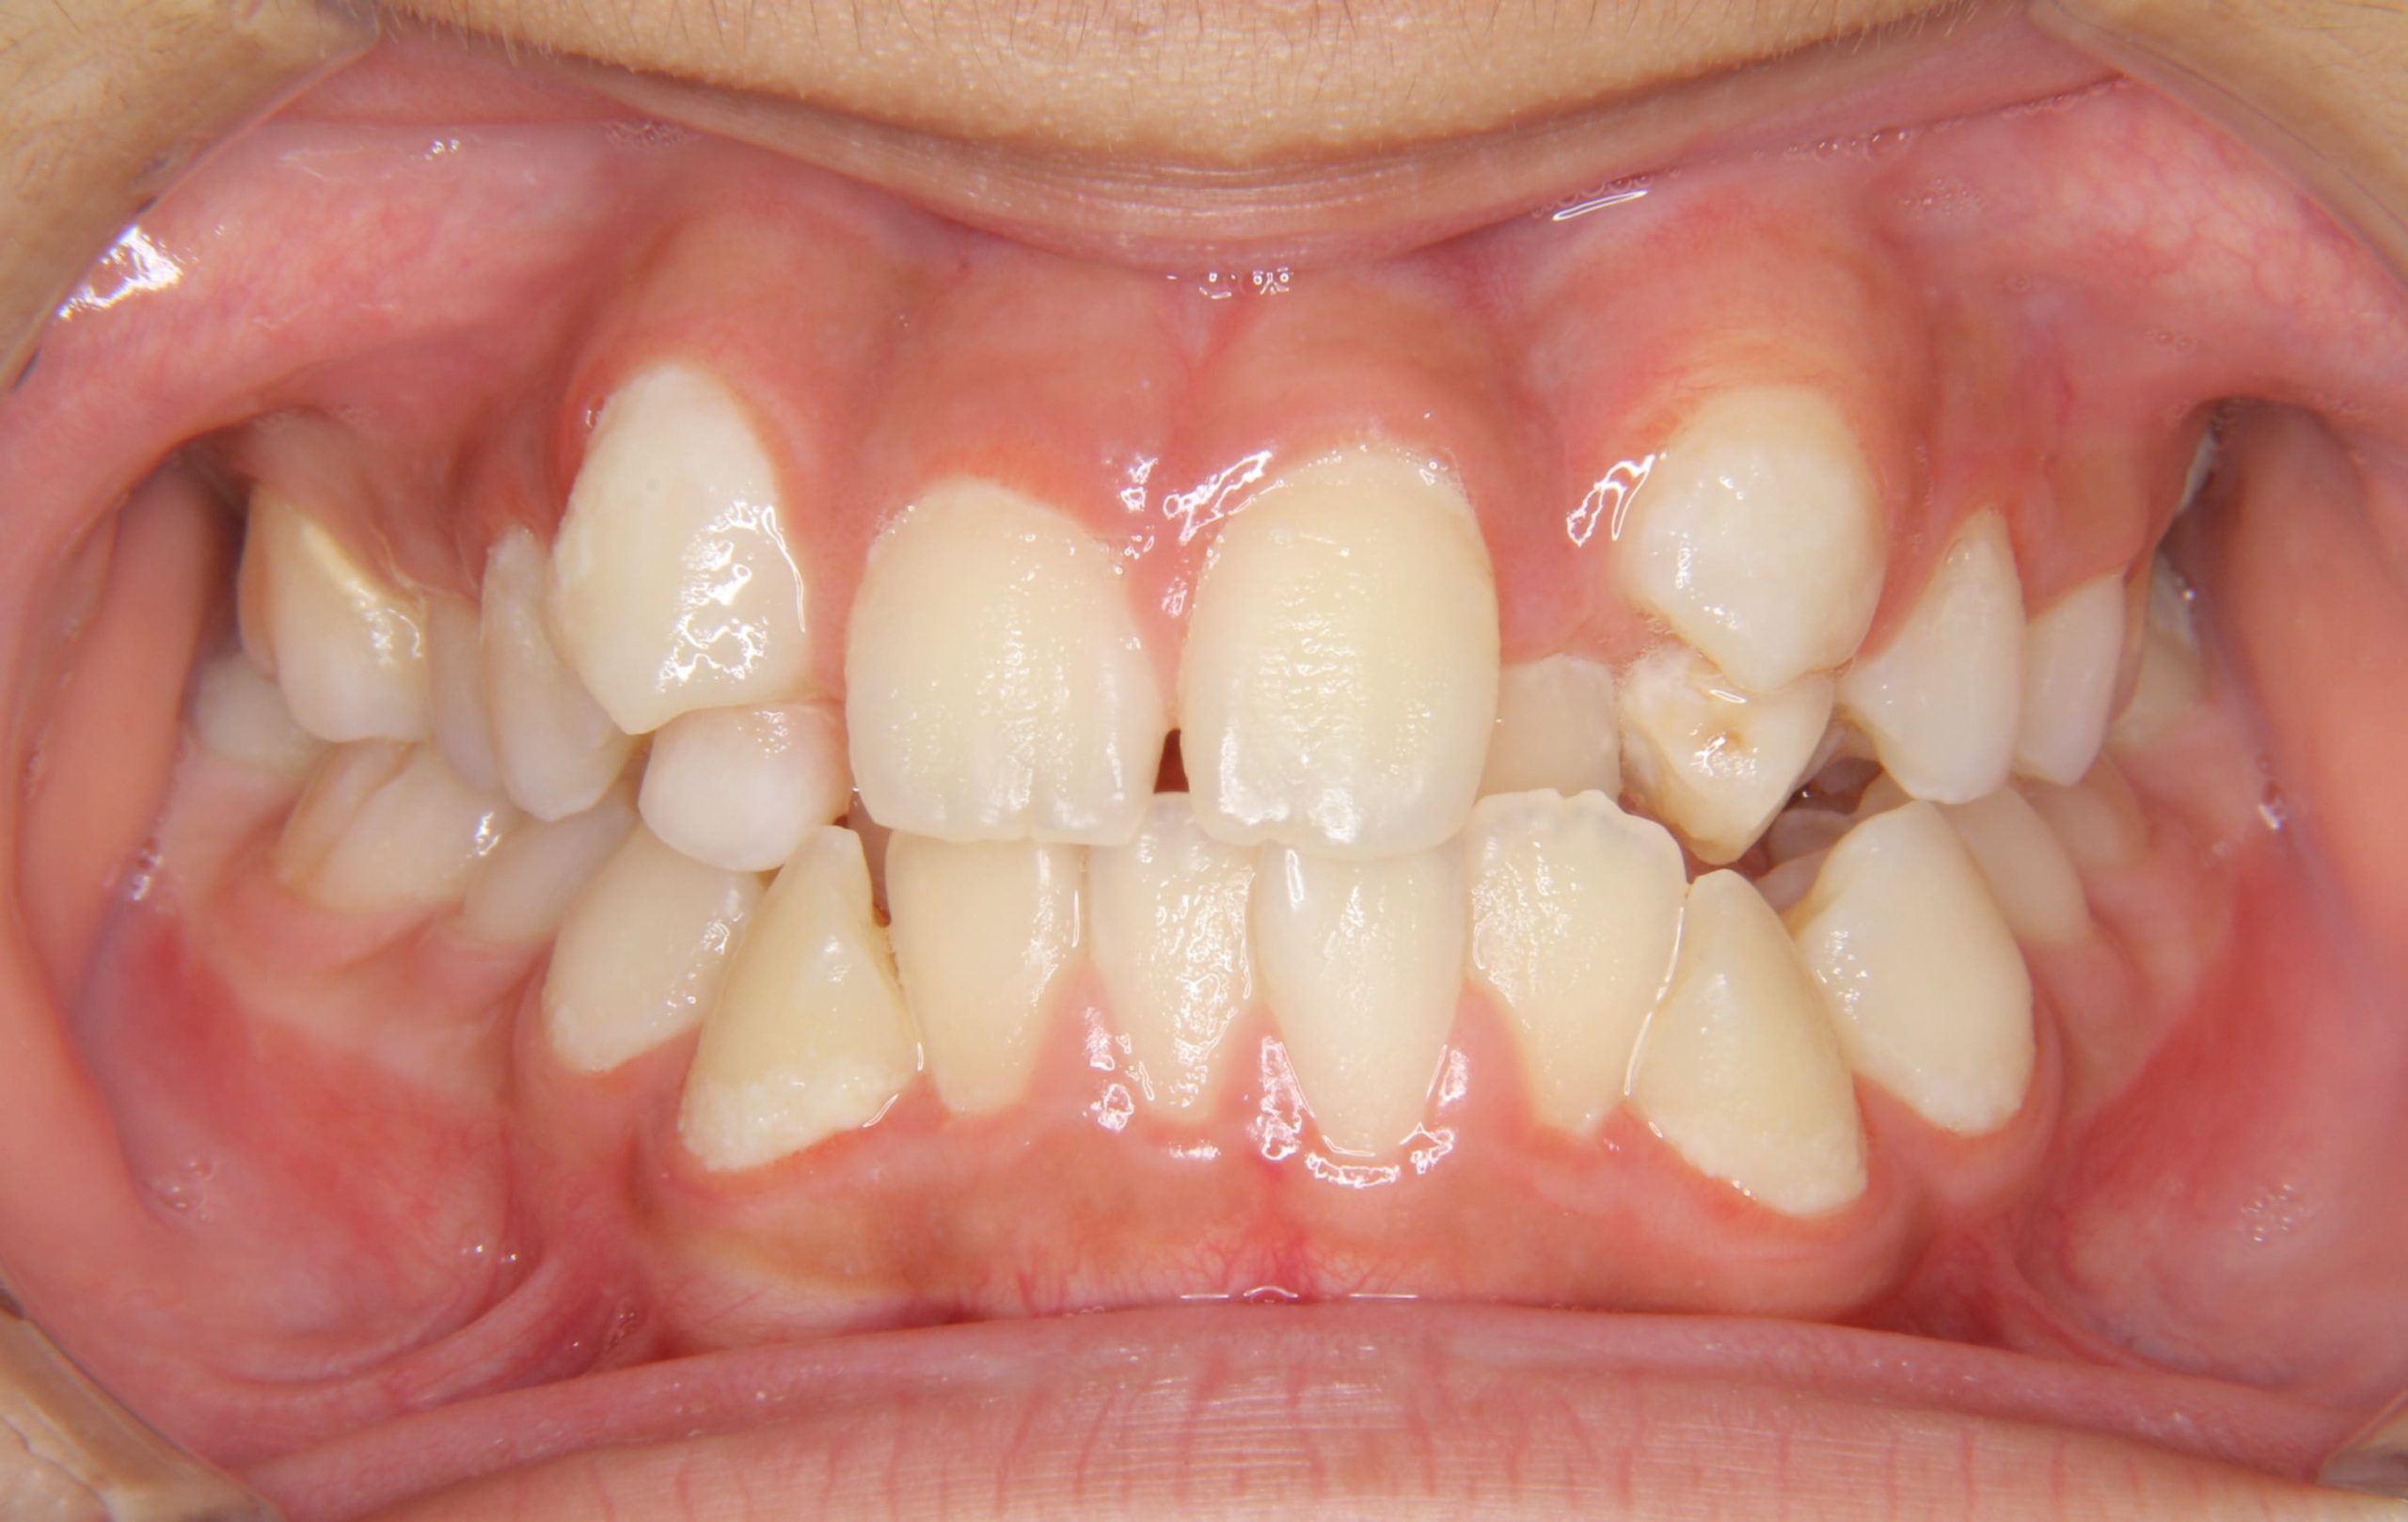 八重歯の矯正治療